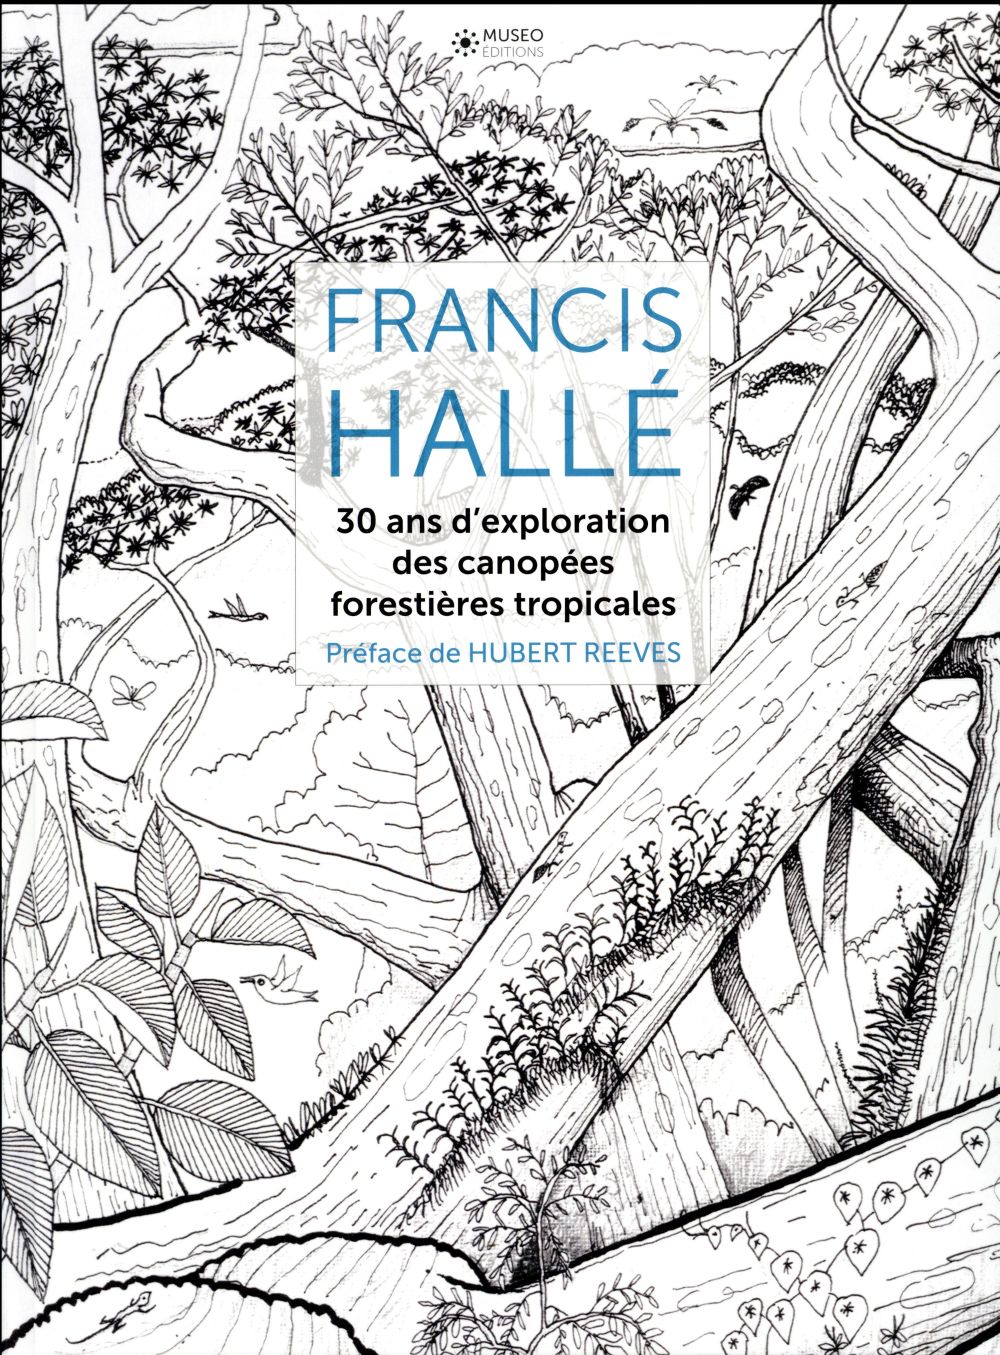 FRANCIS HALLE, 30 ANS D'EXPLORATION DES CANOPEES FORESTIERES TROPICALES